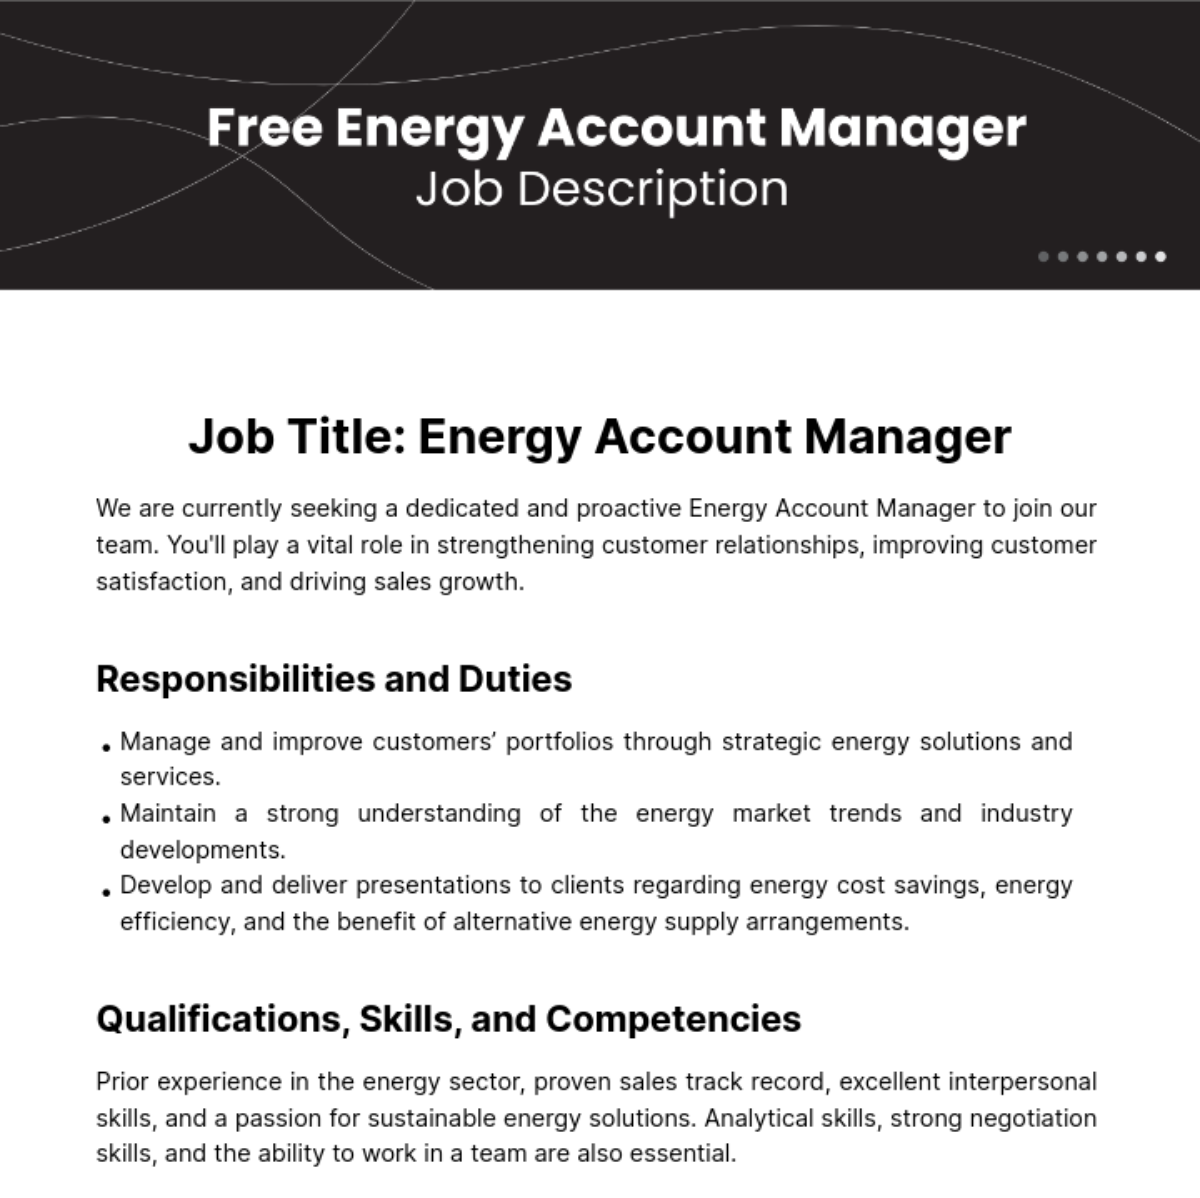 Free Energy Account Manager Job Description Template